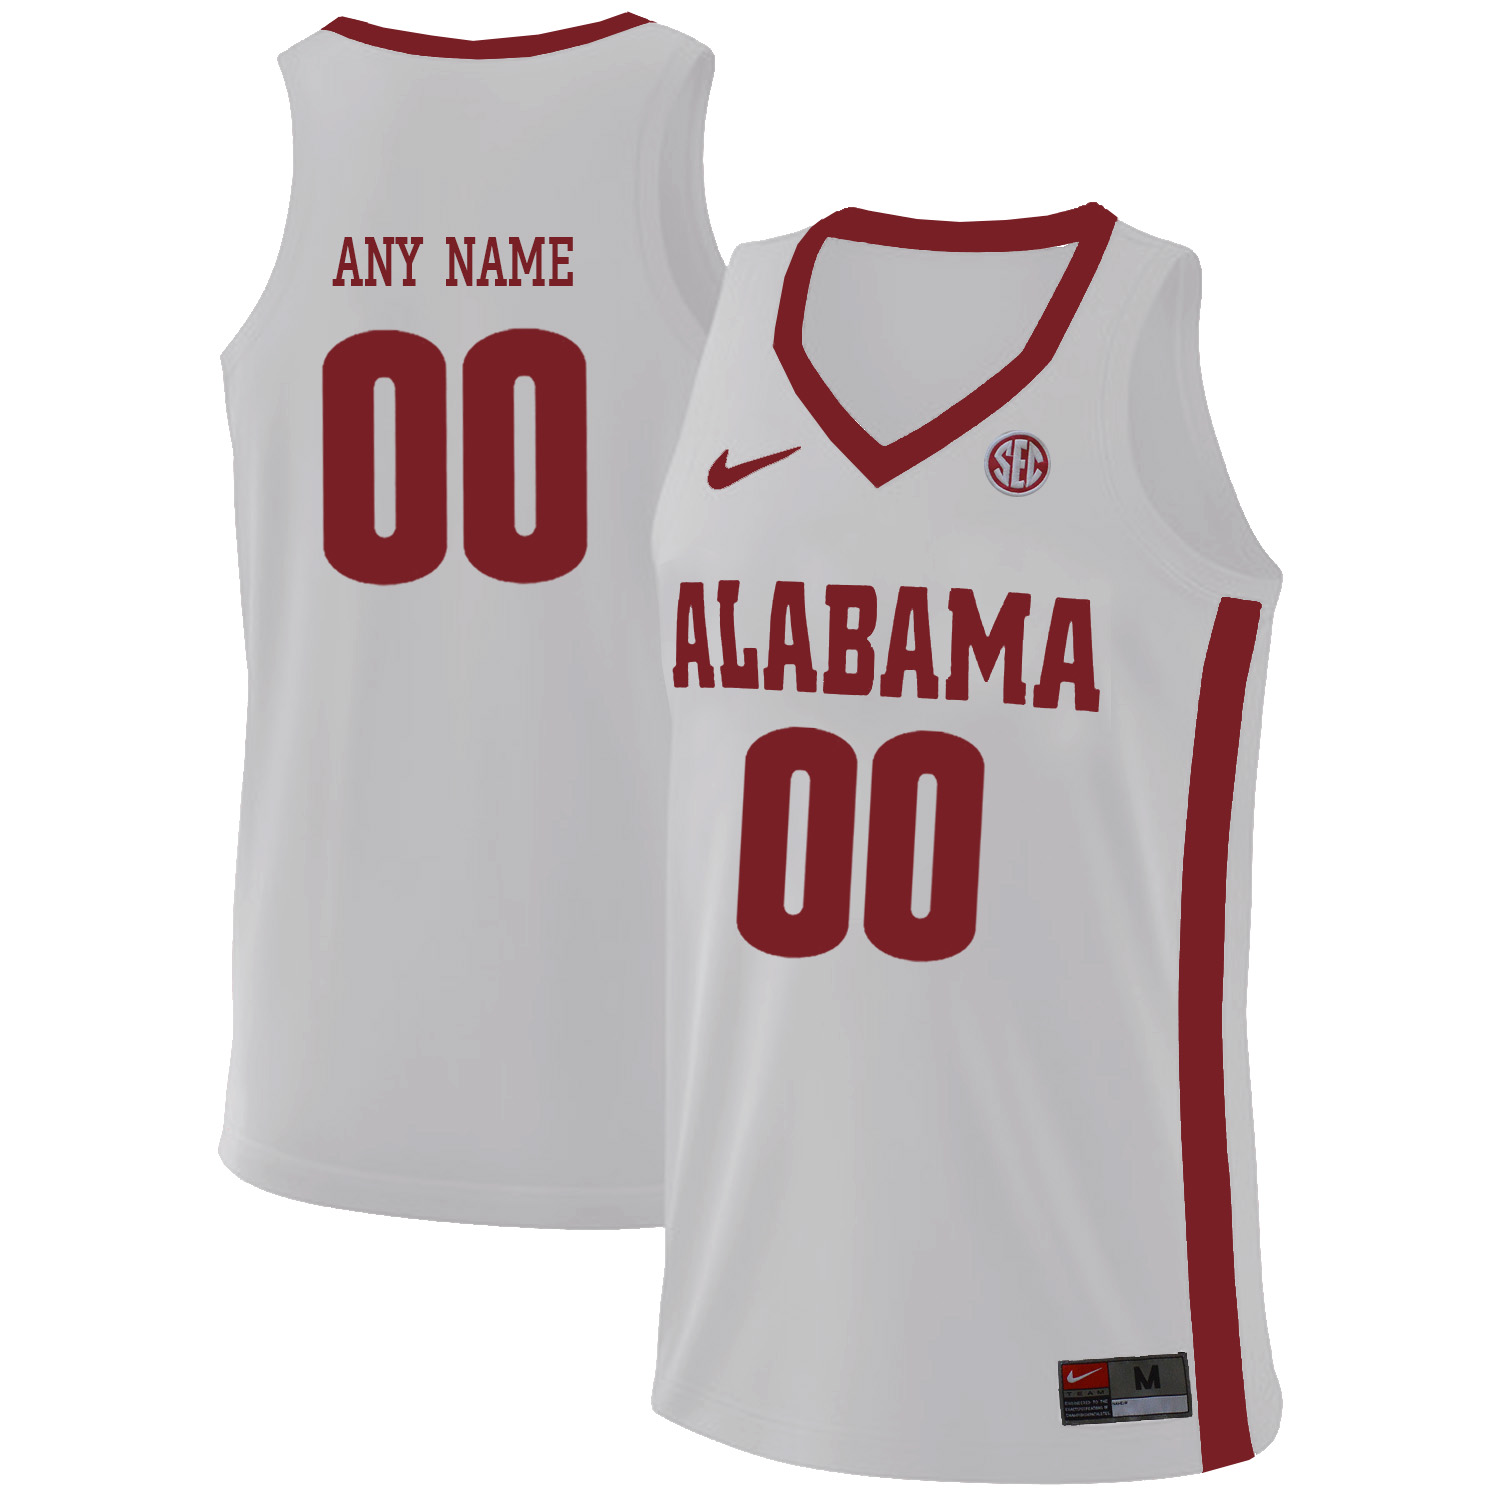 Alabama Crimson Tide White Men's Customized College Basketball Jersey